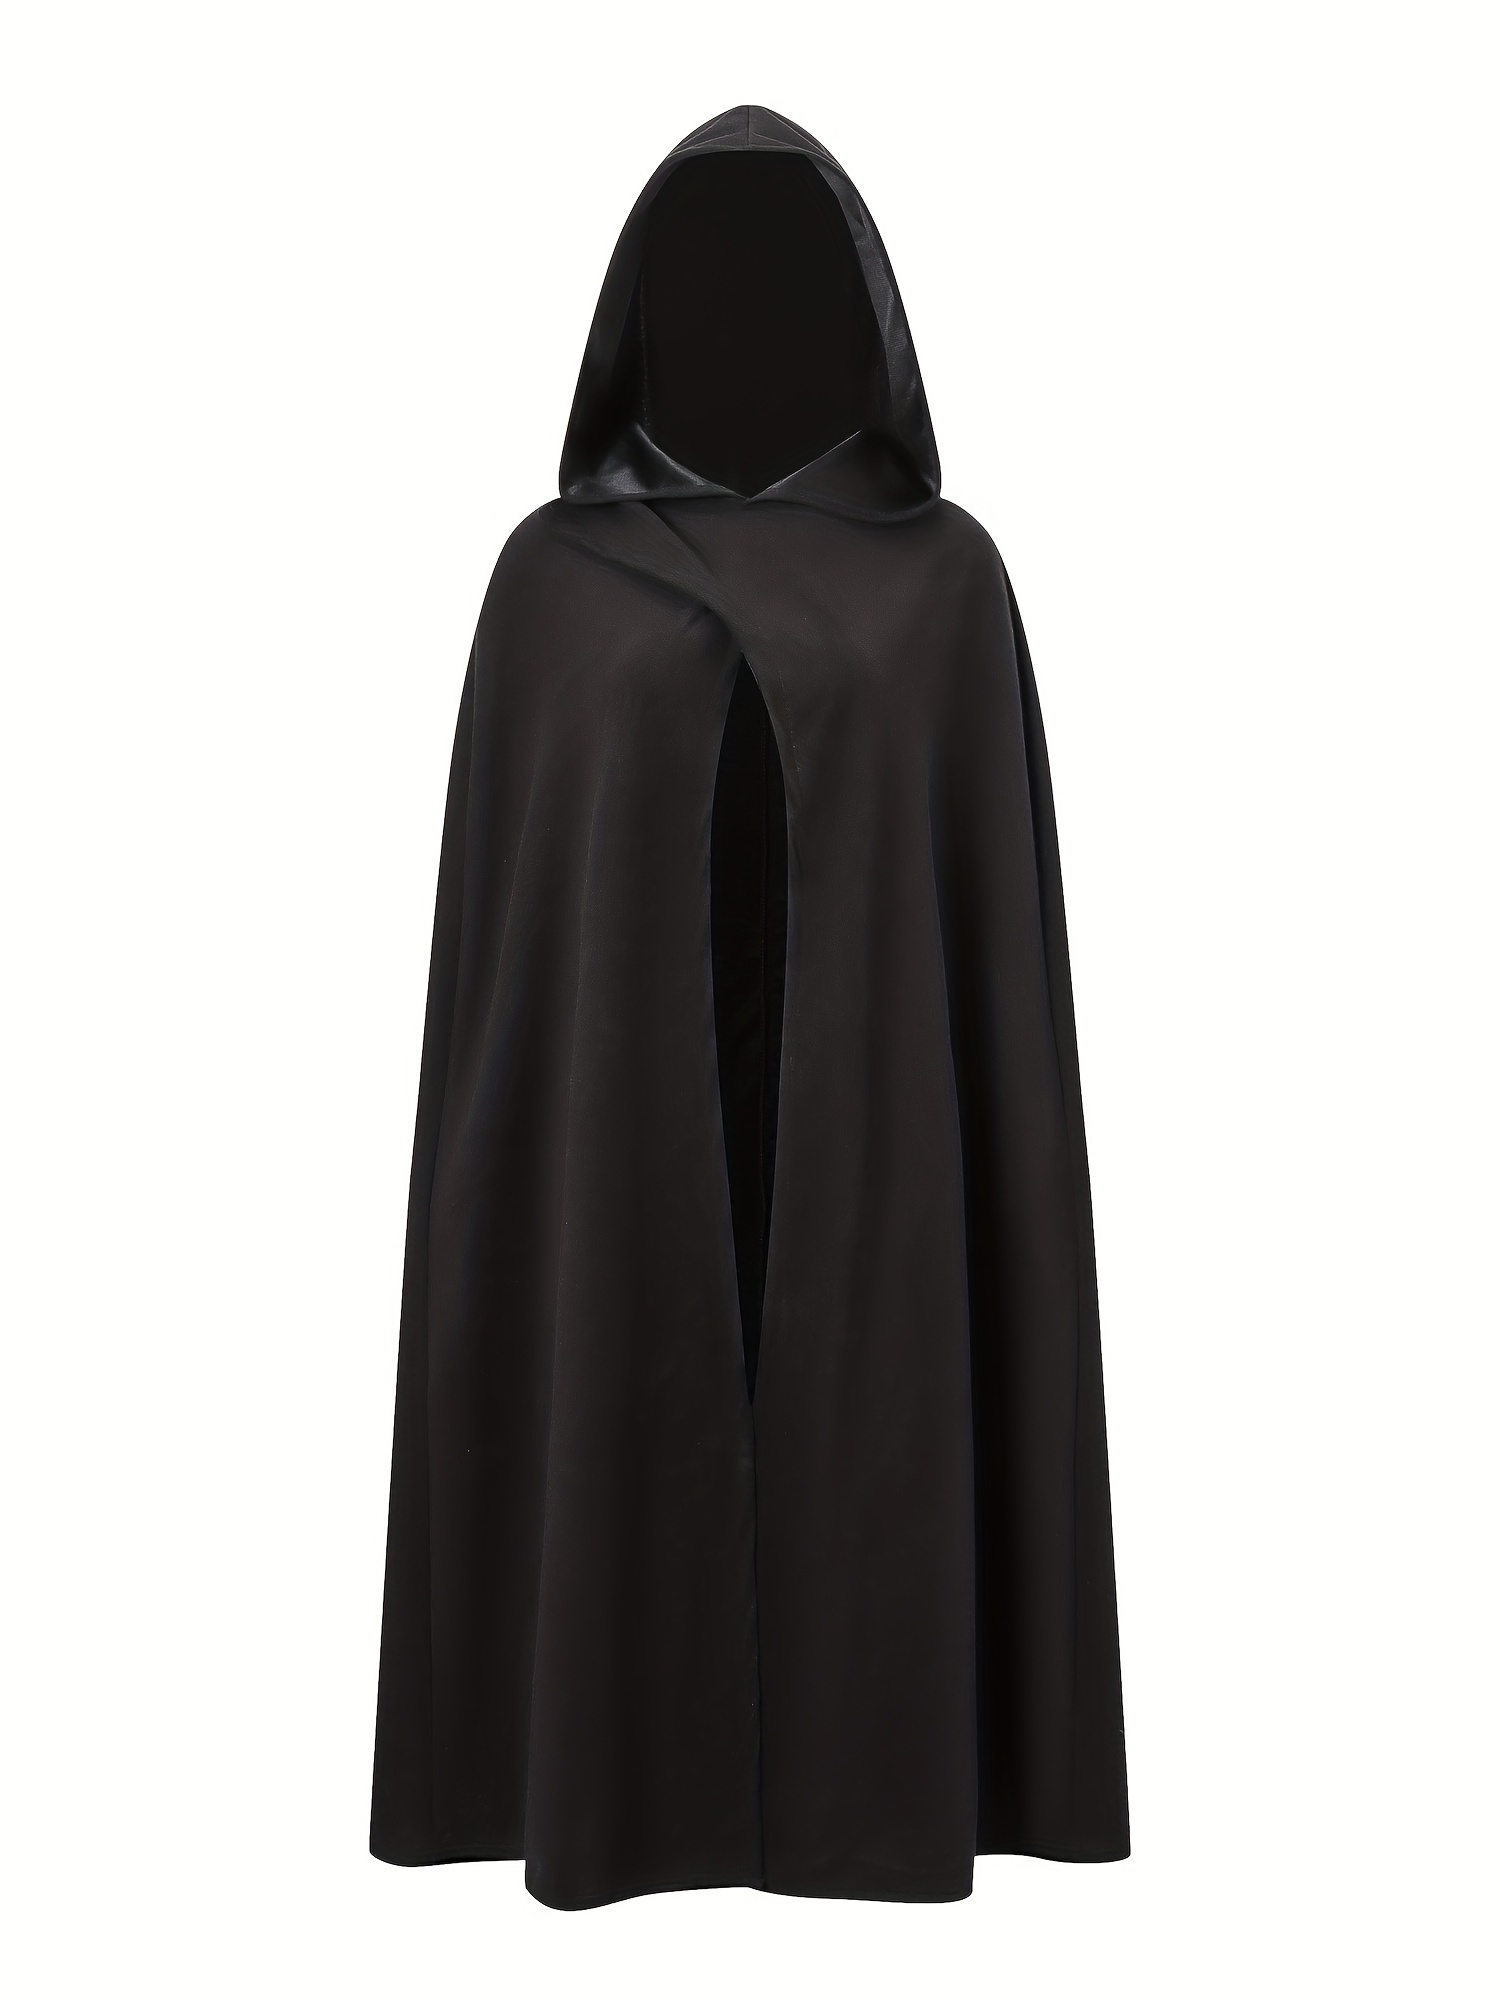 Solid Split Hooded Cloak, Elegant Cosplay Cloak for Fall & Winter, Women's Clothing, Black Cape with Hood, Black Hooded Robe Costume,Temu